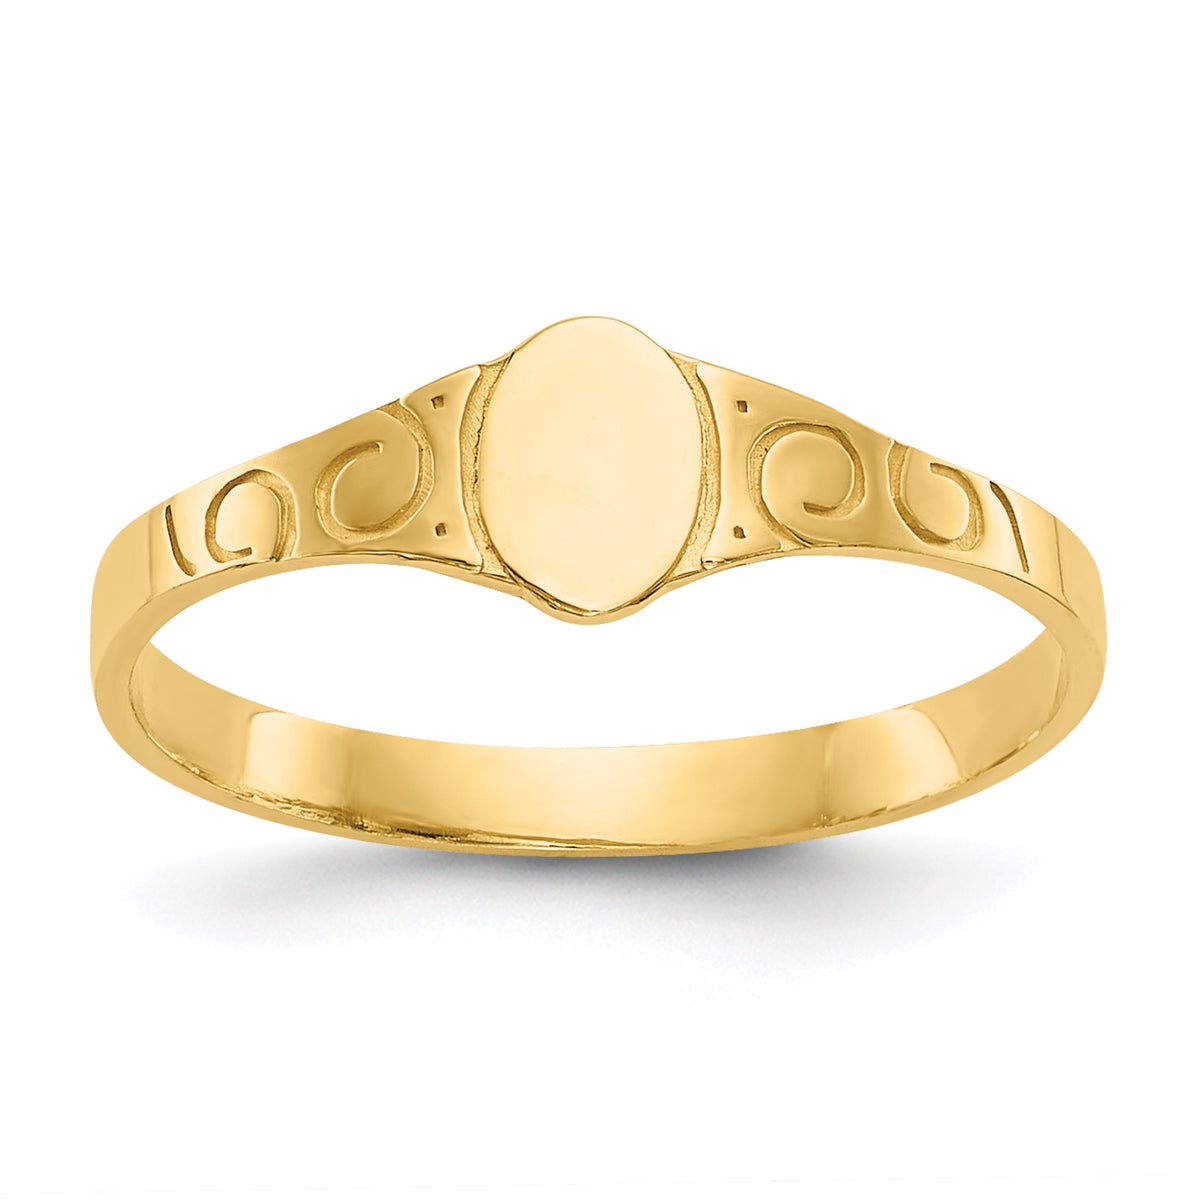 10k Polished Oval Child's Signet Ring